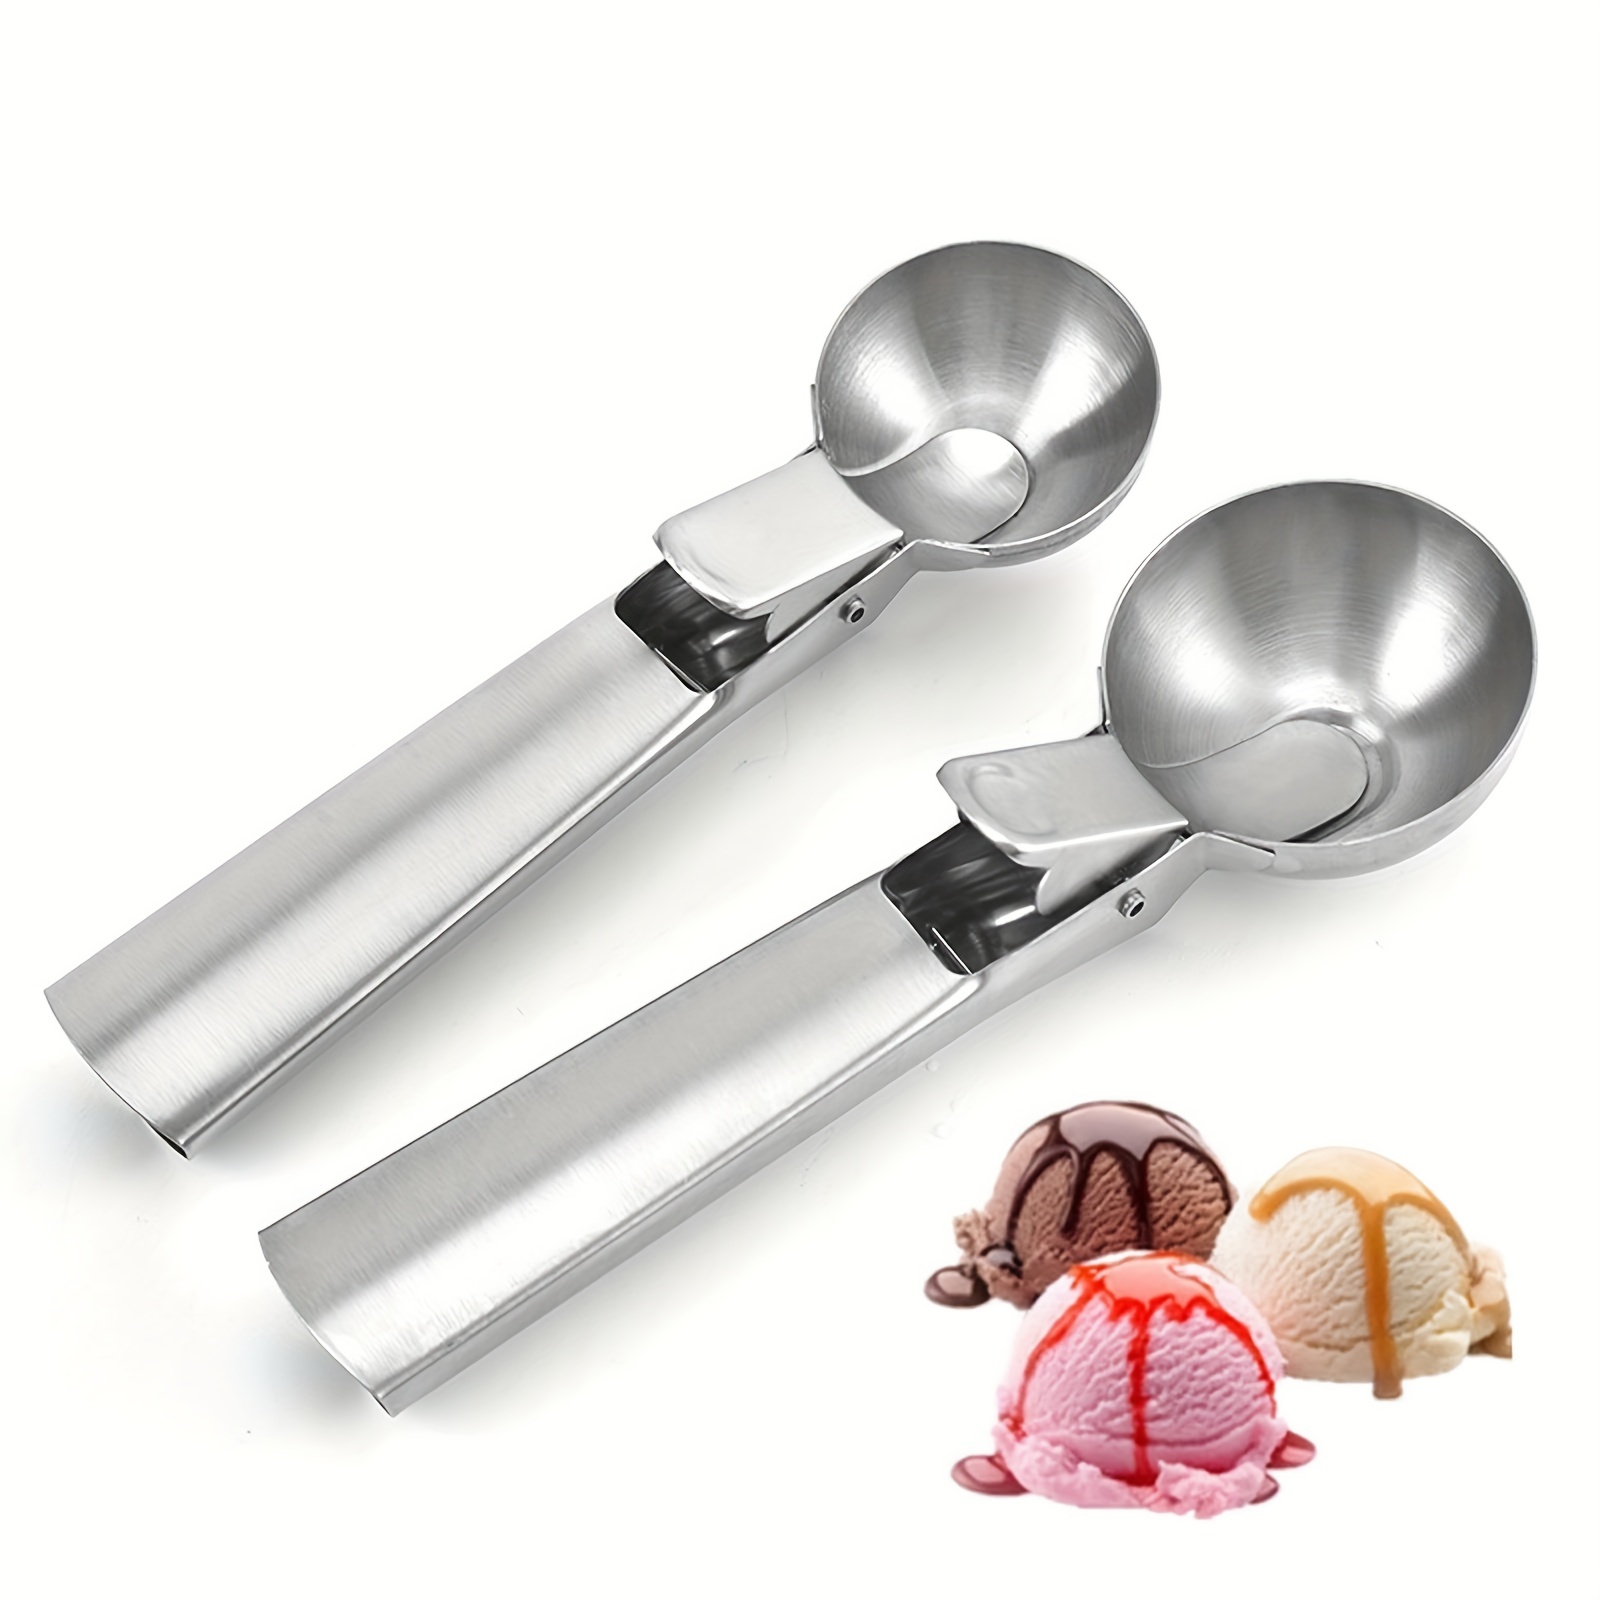 Stainless Steel Ice Cream Scoop With Trigger, Anti-freeze Handle, Icecream  Spoon Perfect For Gelatos, Frozen Yogurt, Sundaes - Temu